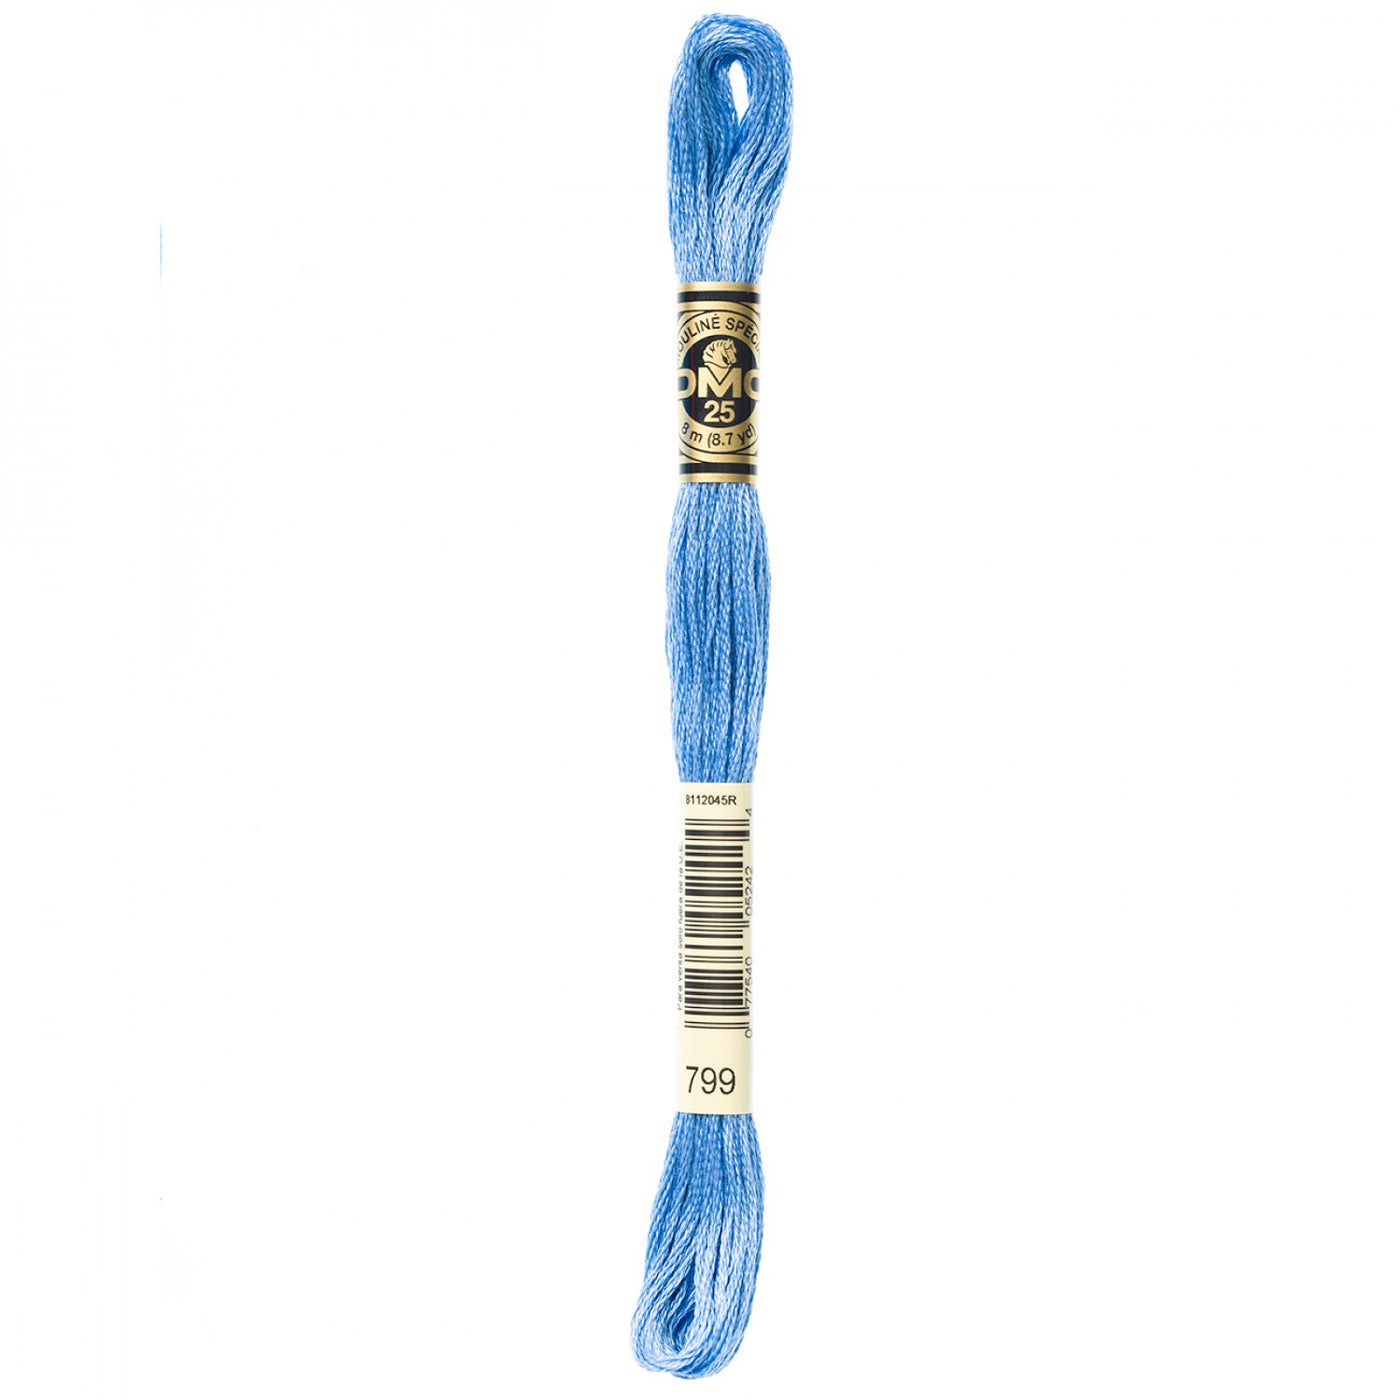 6-Strand Embroidery Floss 799 Medium Delft Blue (6675782959269)